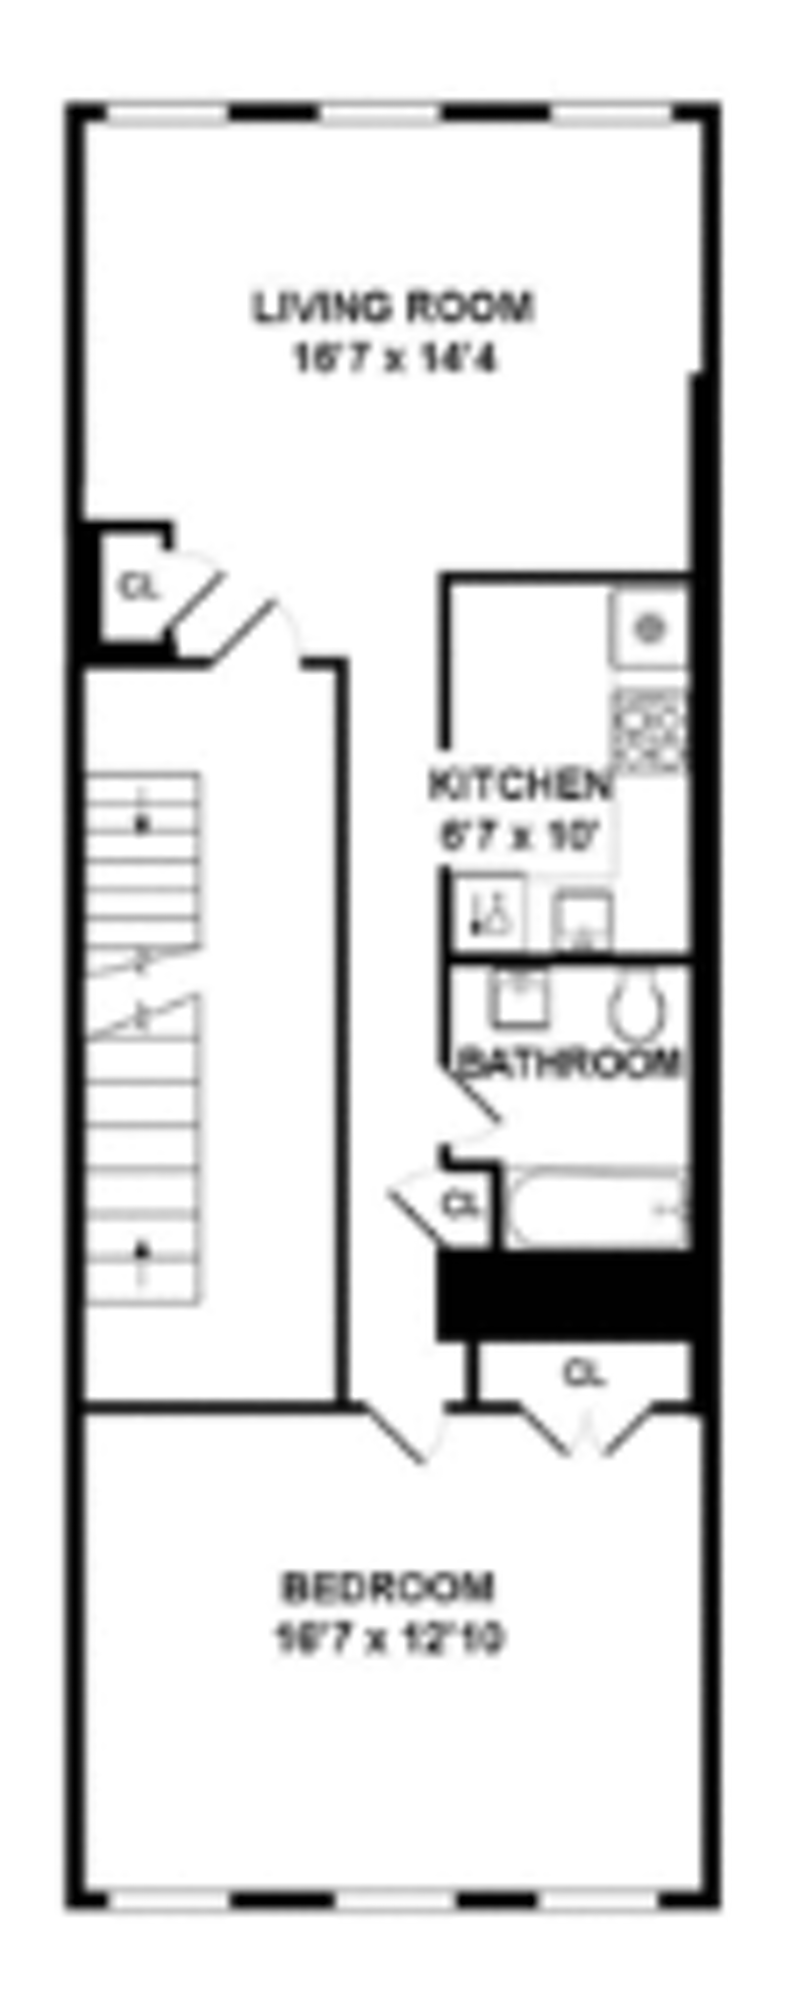 Floorplan for 141 West 132nd Street